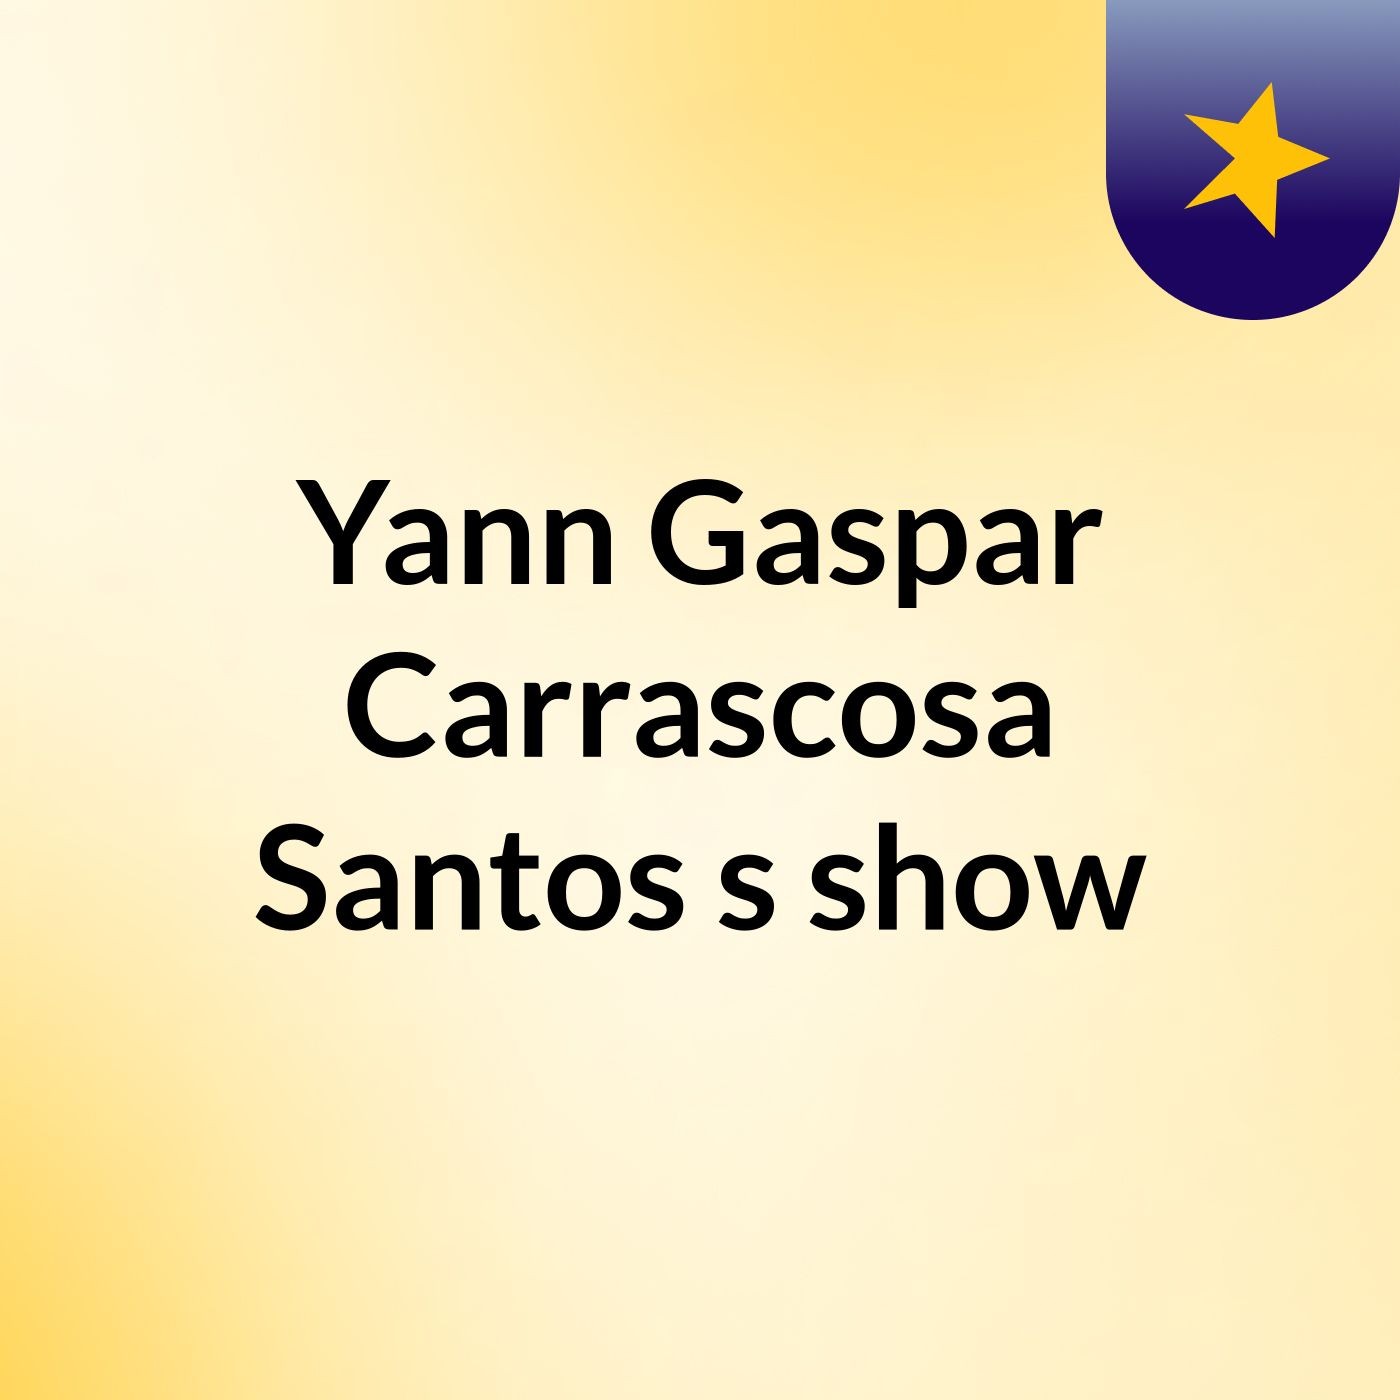 Yann Gaspar Carrascosa Santos's show